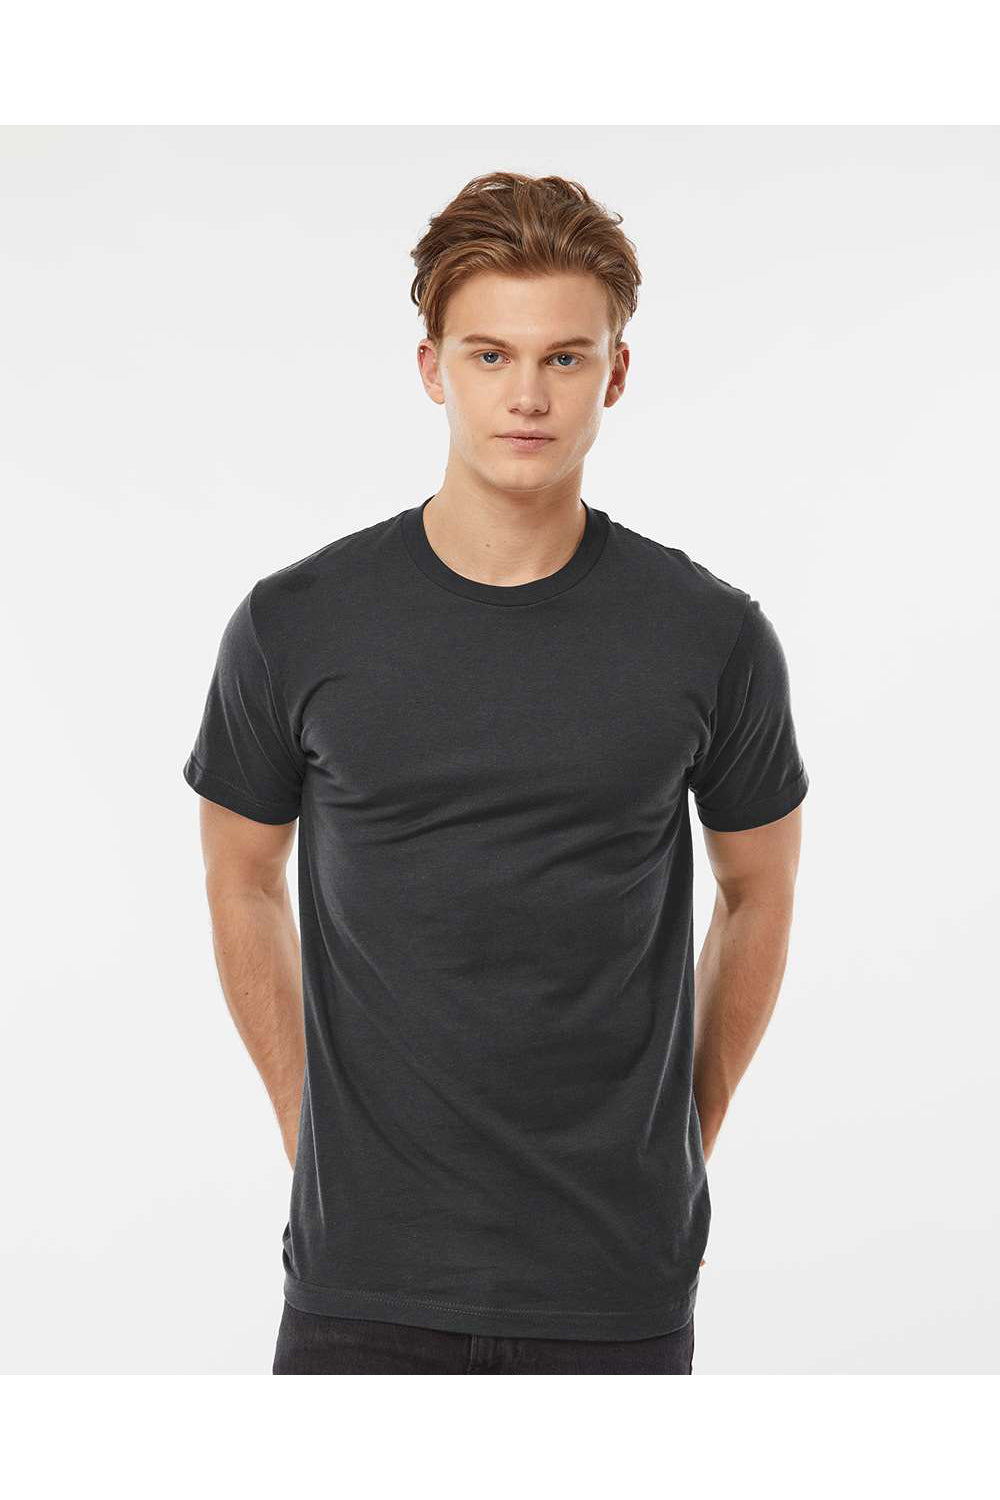 Tultex 202 Mens Fine Jersey Short Sleeve Crewneck T-Shirt Coal Grey Model Front